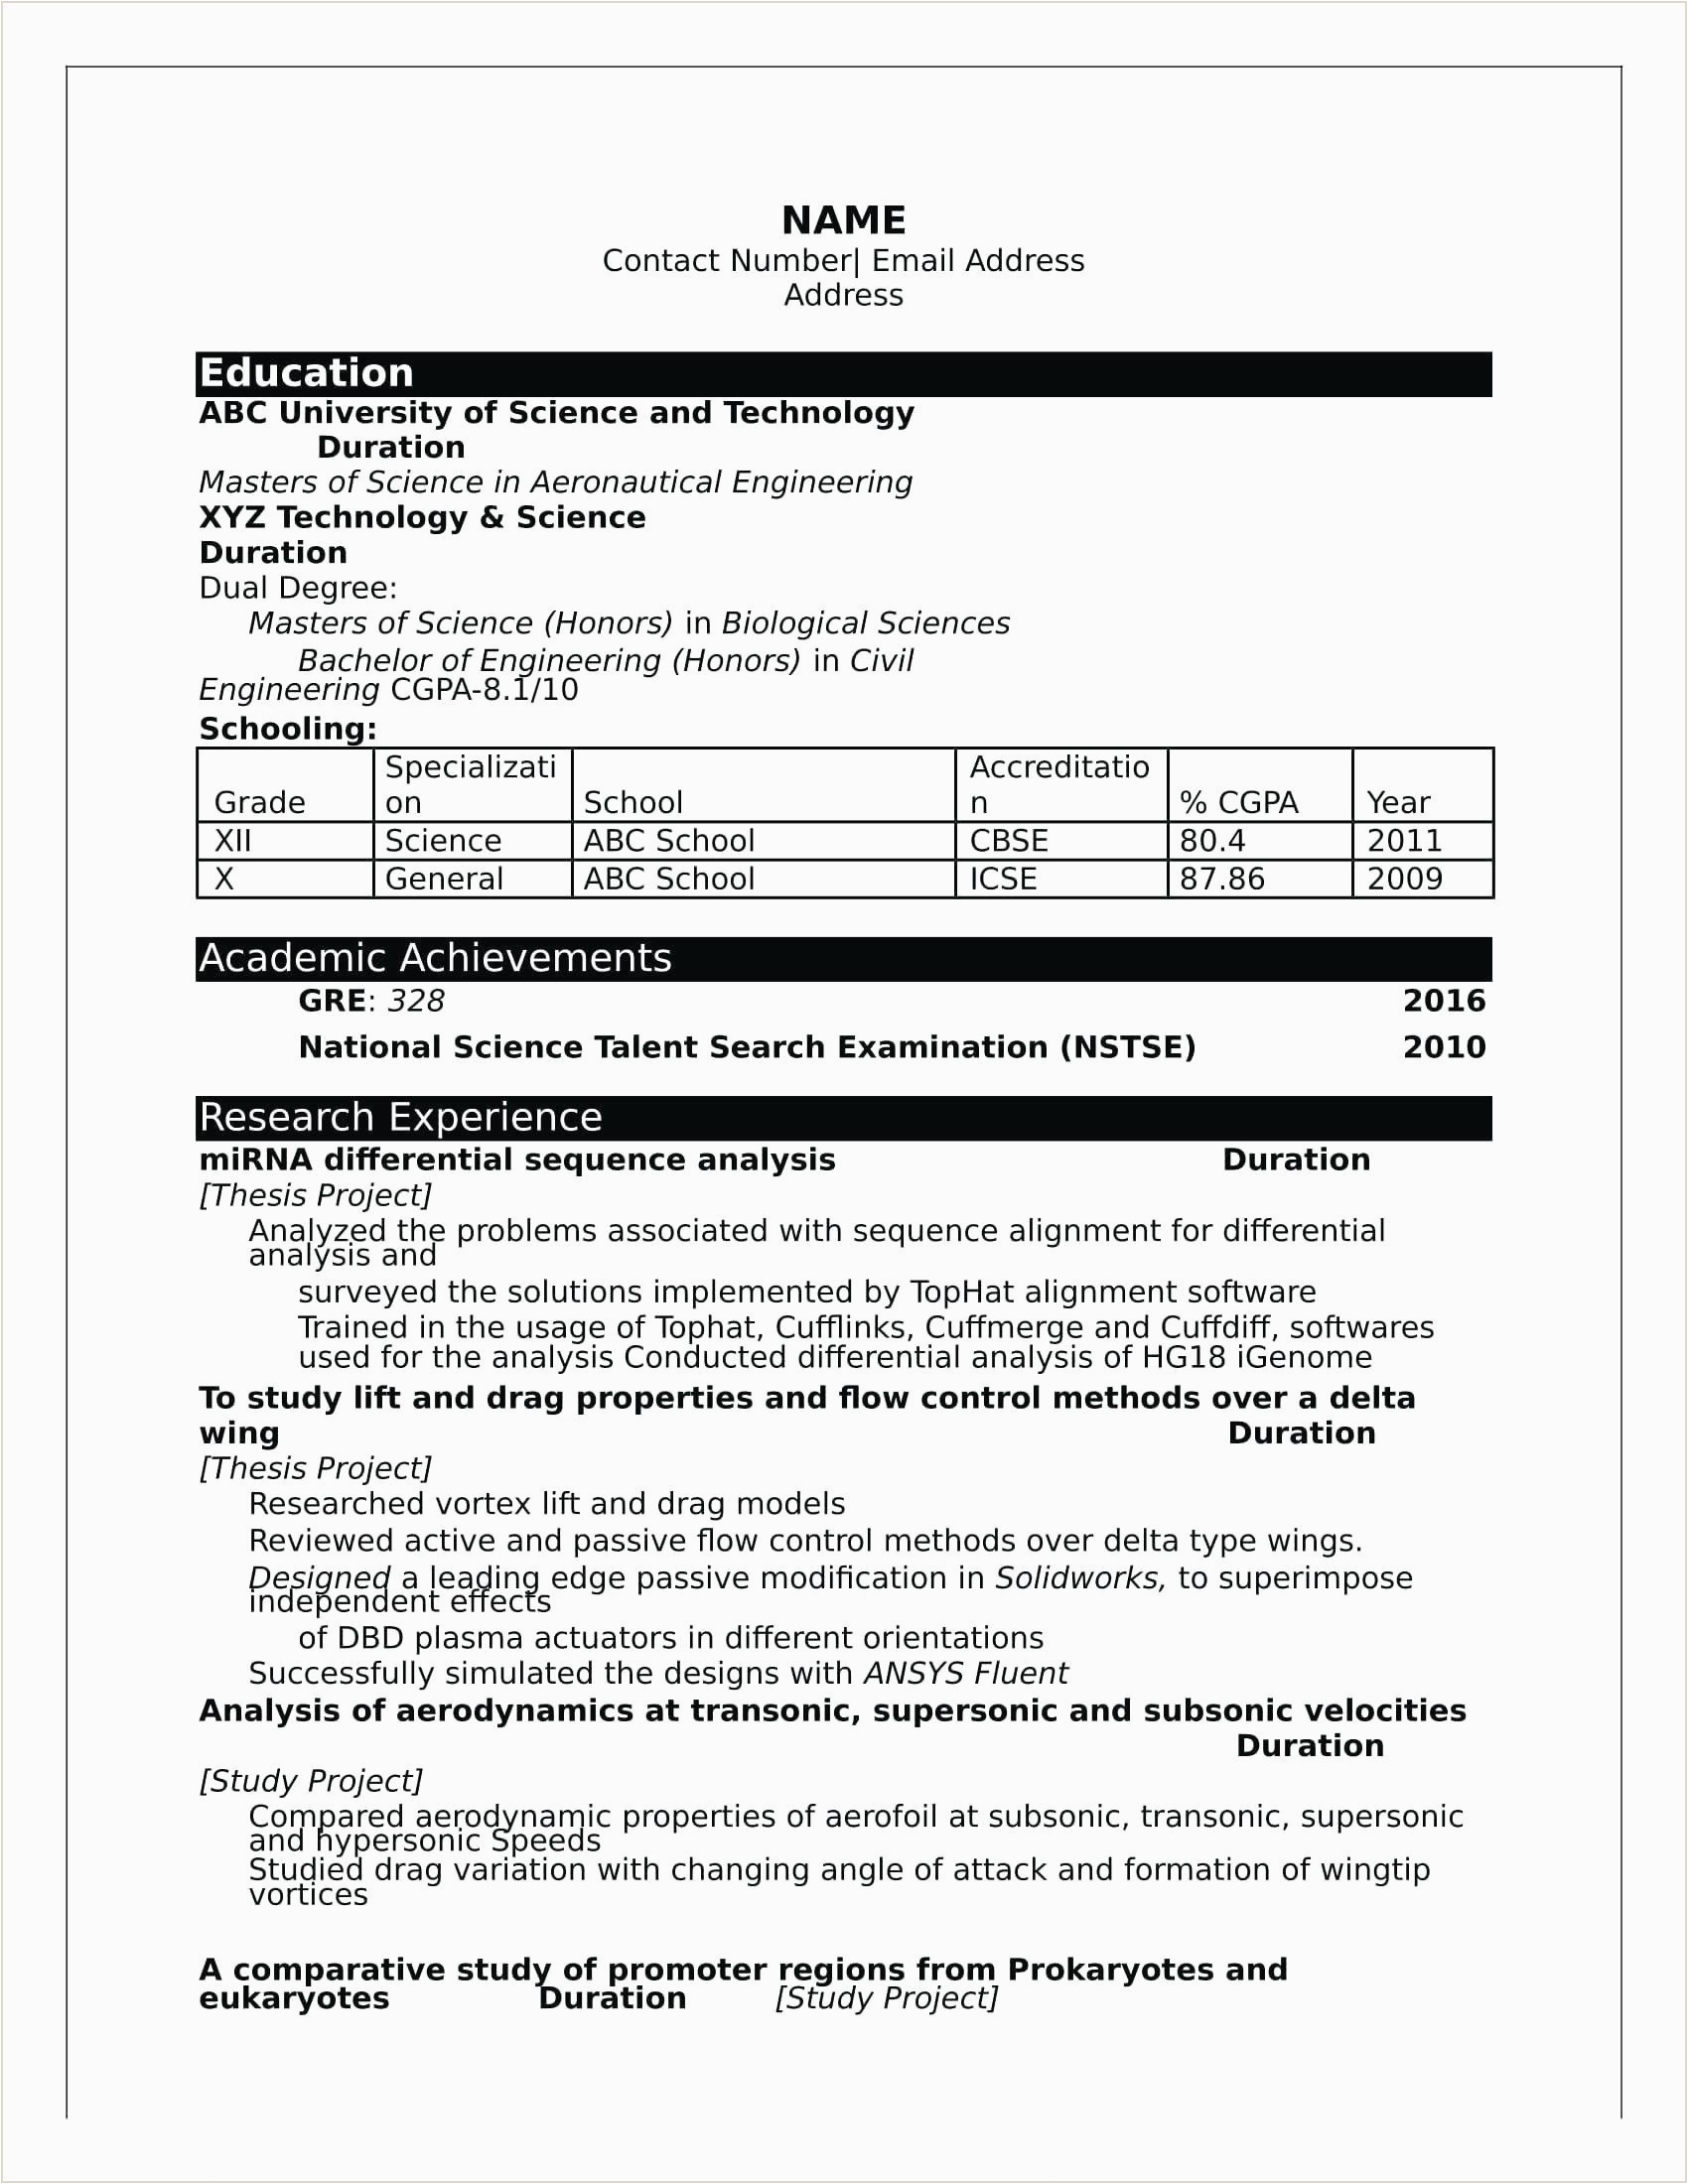 Sample Resume for Industrial Engineer Fresher Fresher Civil Engineer Resume format Pdf Best Resume